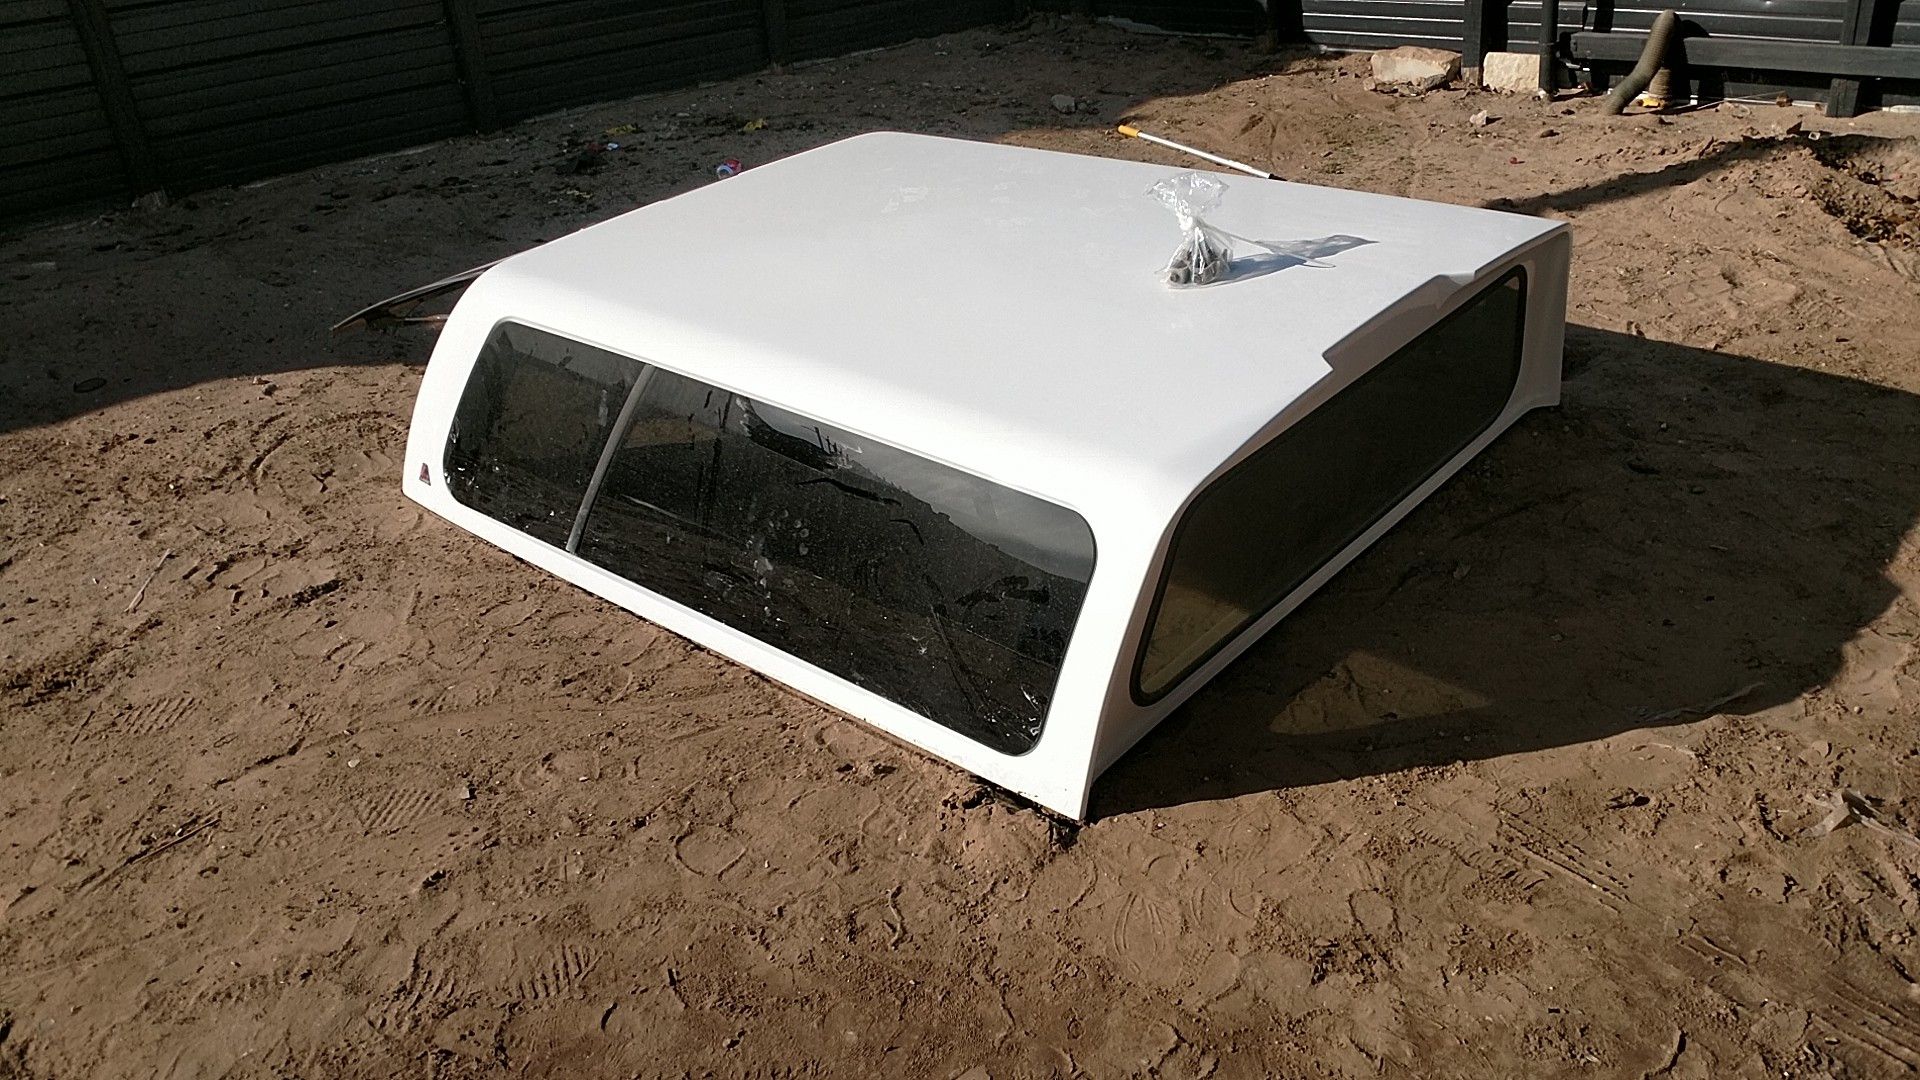 Camper shell leer model fits 2007 to 2014 short bed extended cab Chevrolet